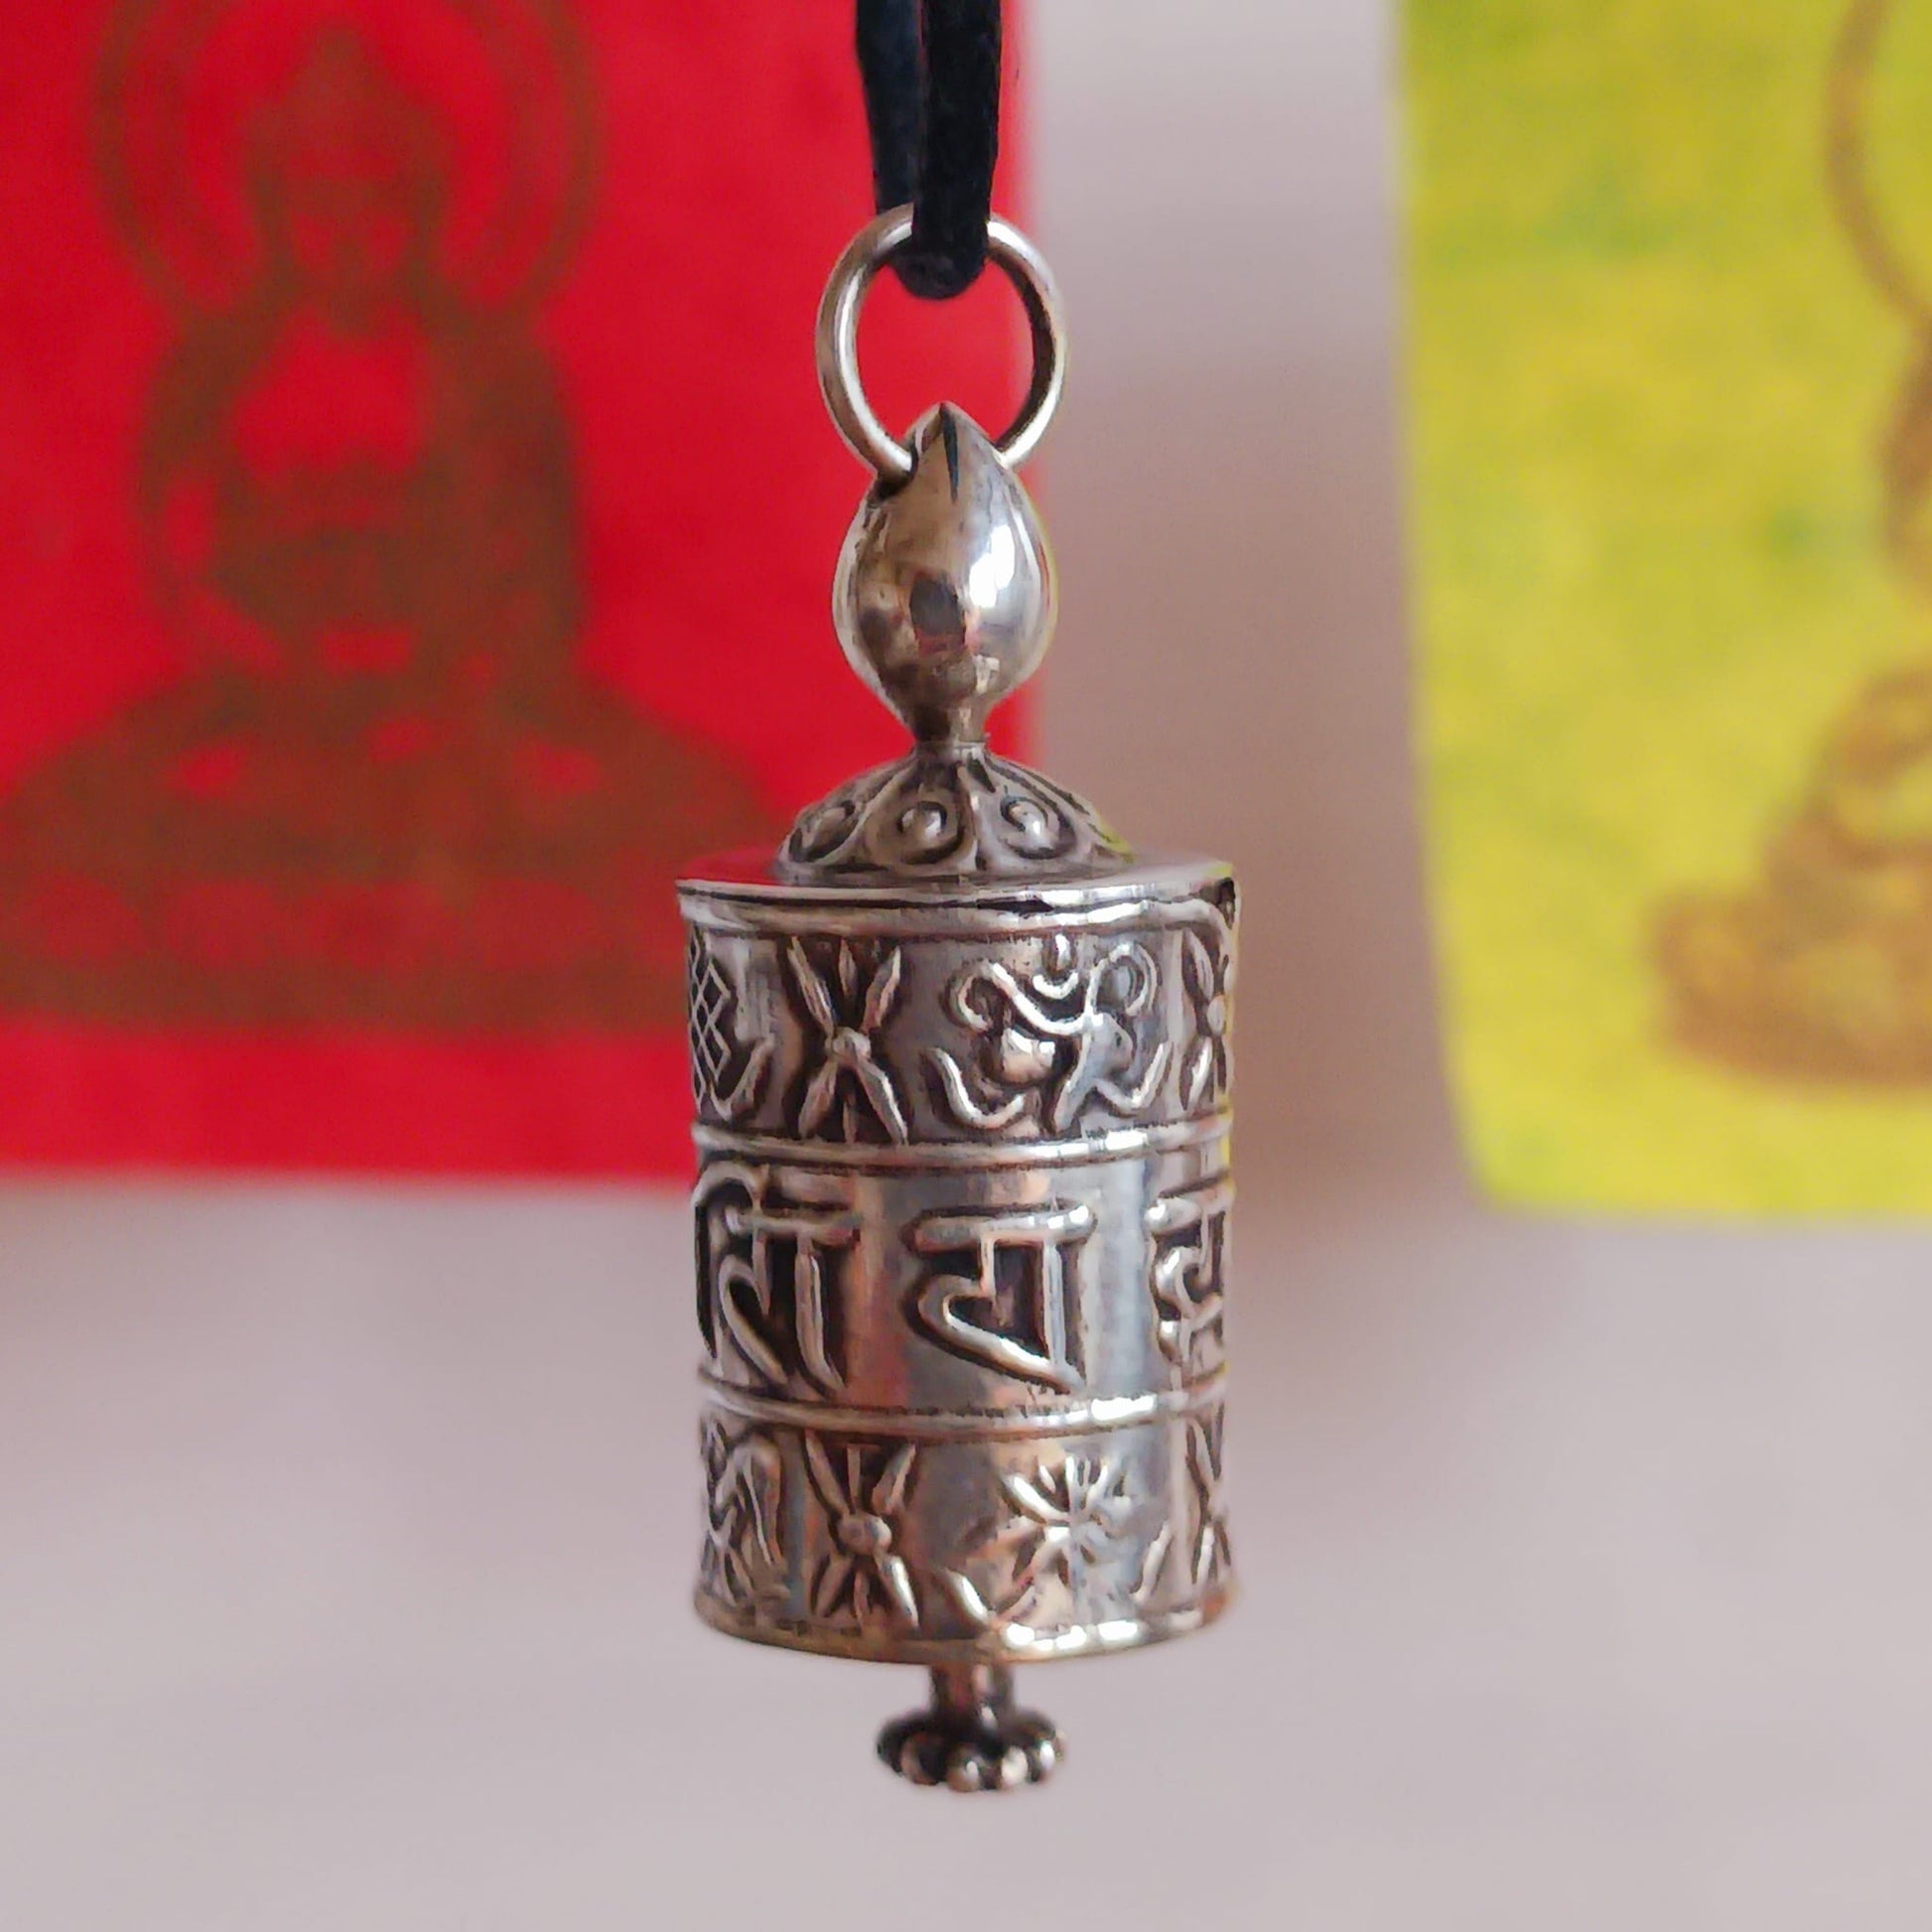 Prayer Wheel Nepalese Silver Pendant